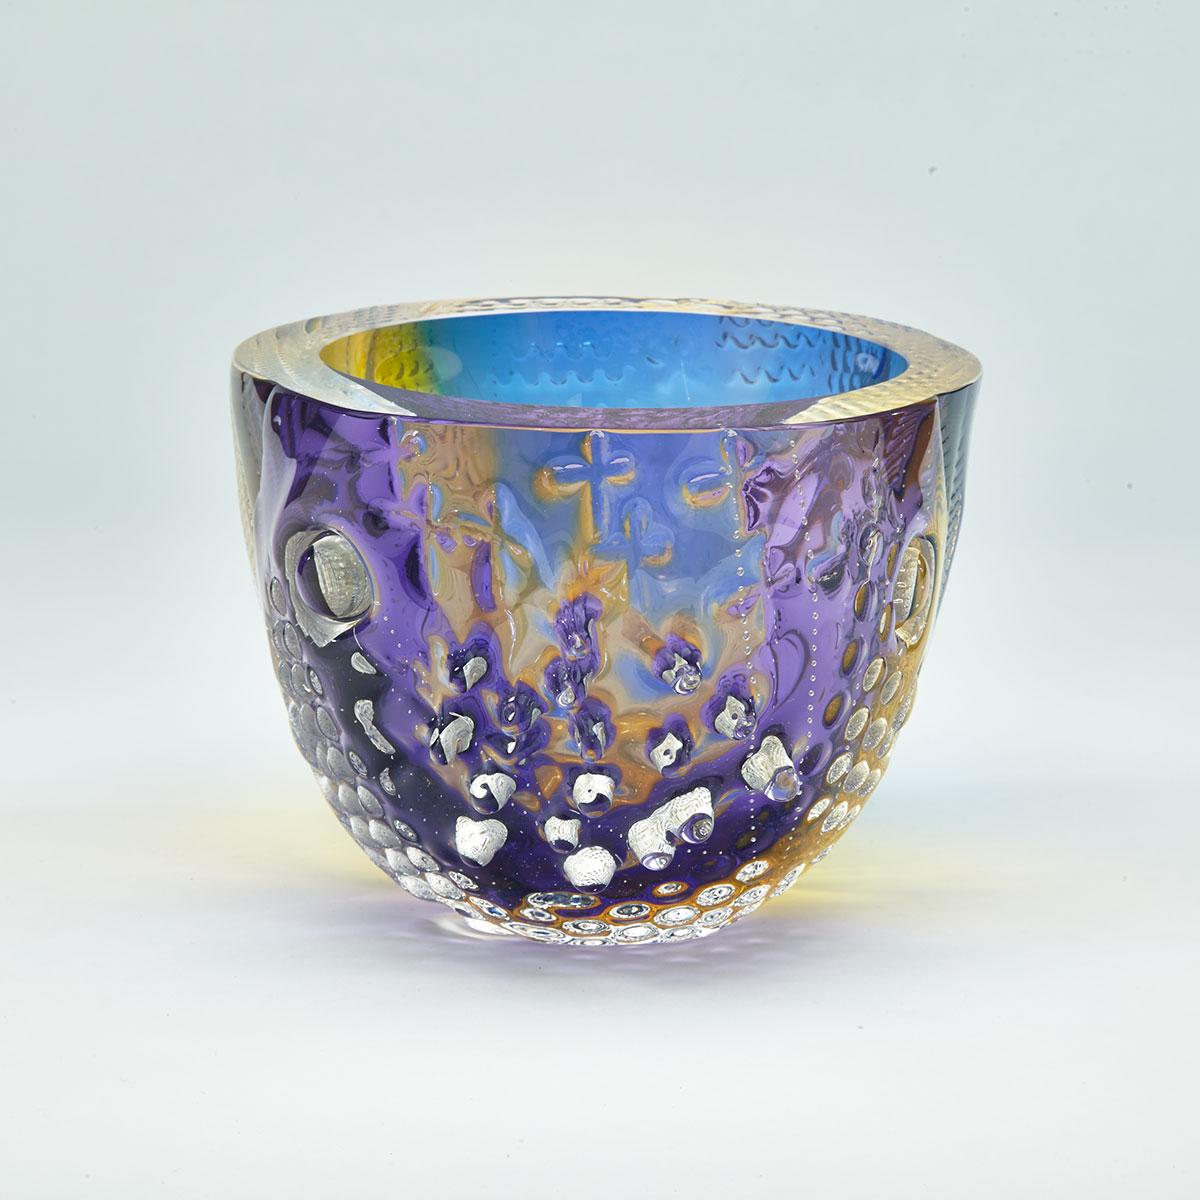 Leon Applebaum (American, b.1945), Textured Glass Vase, c.2000